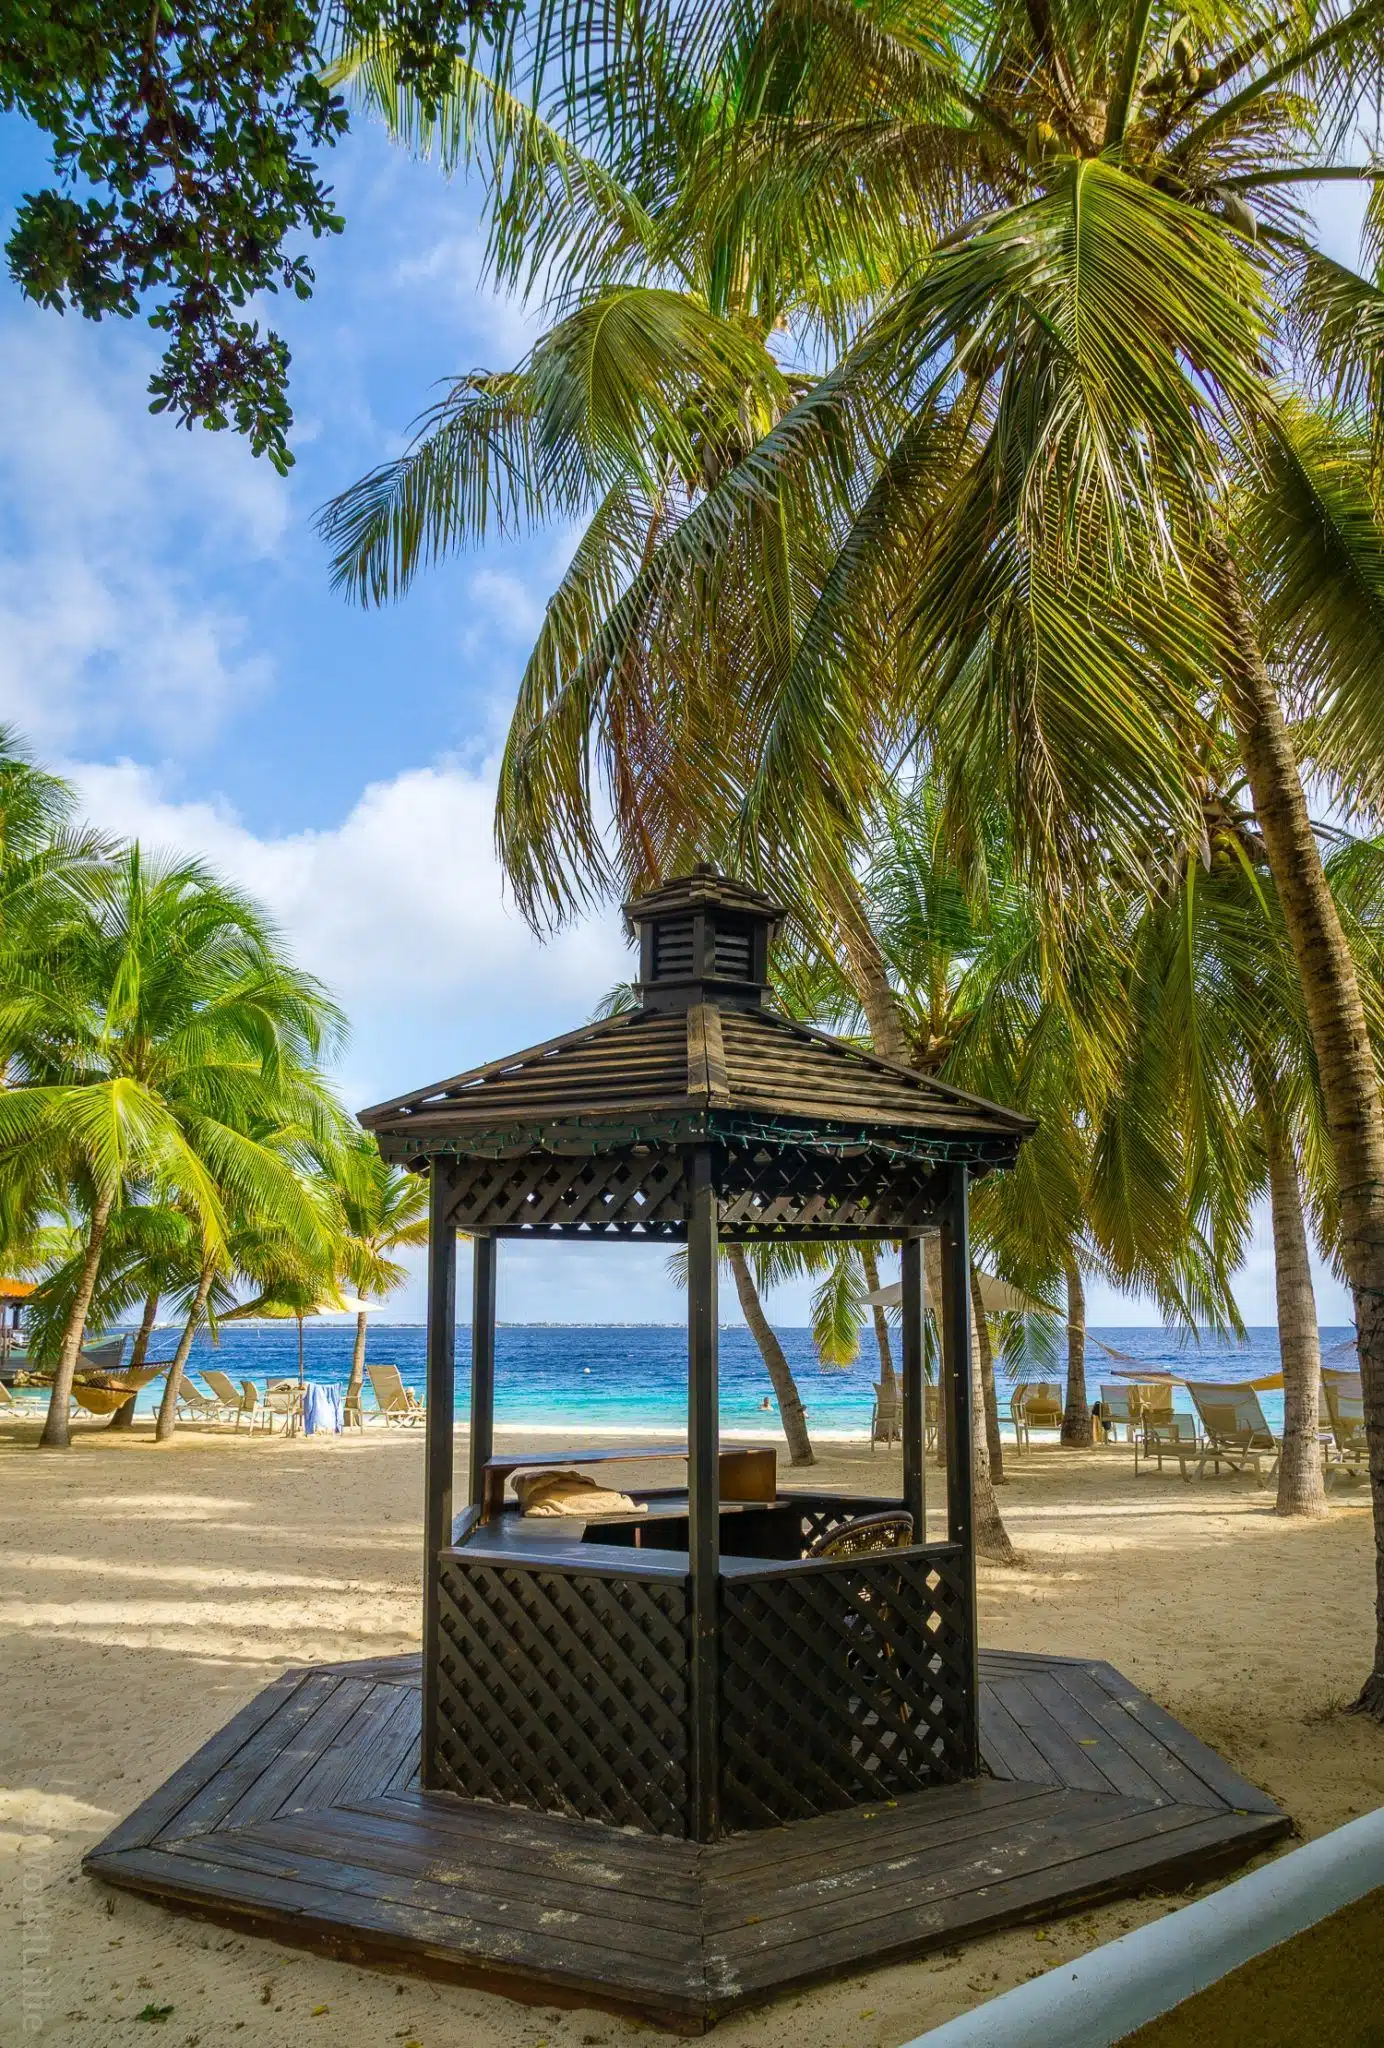 Hammocks, palm trees, and Caribbean ocean breezes. 